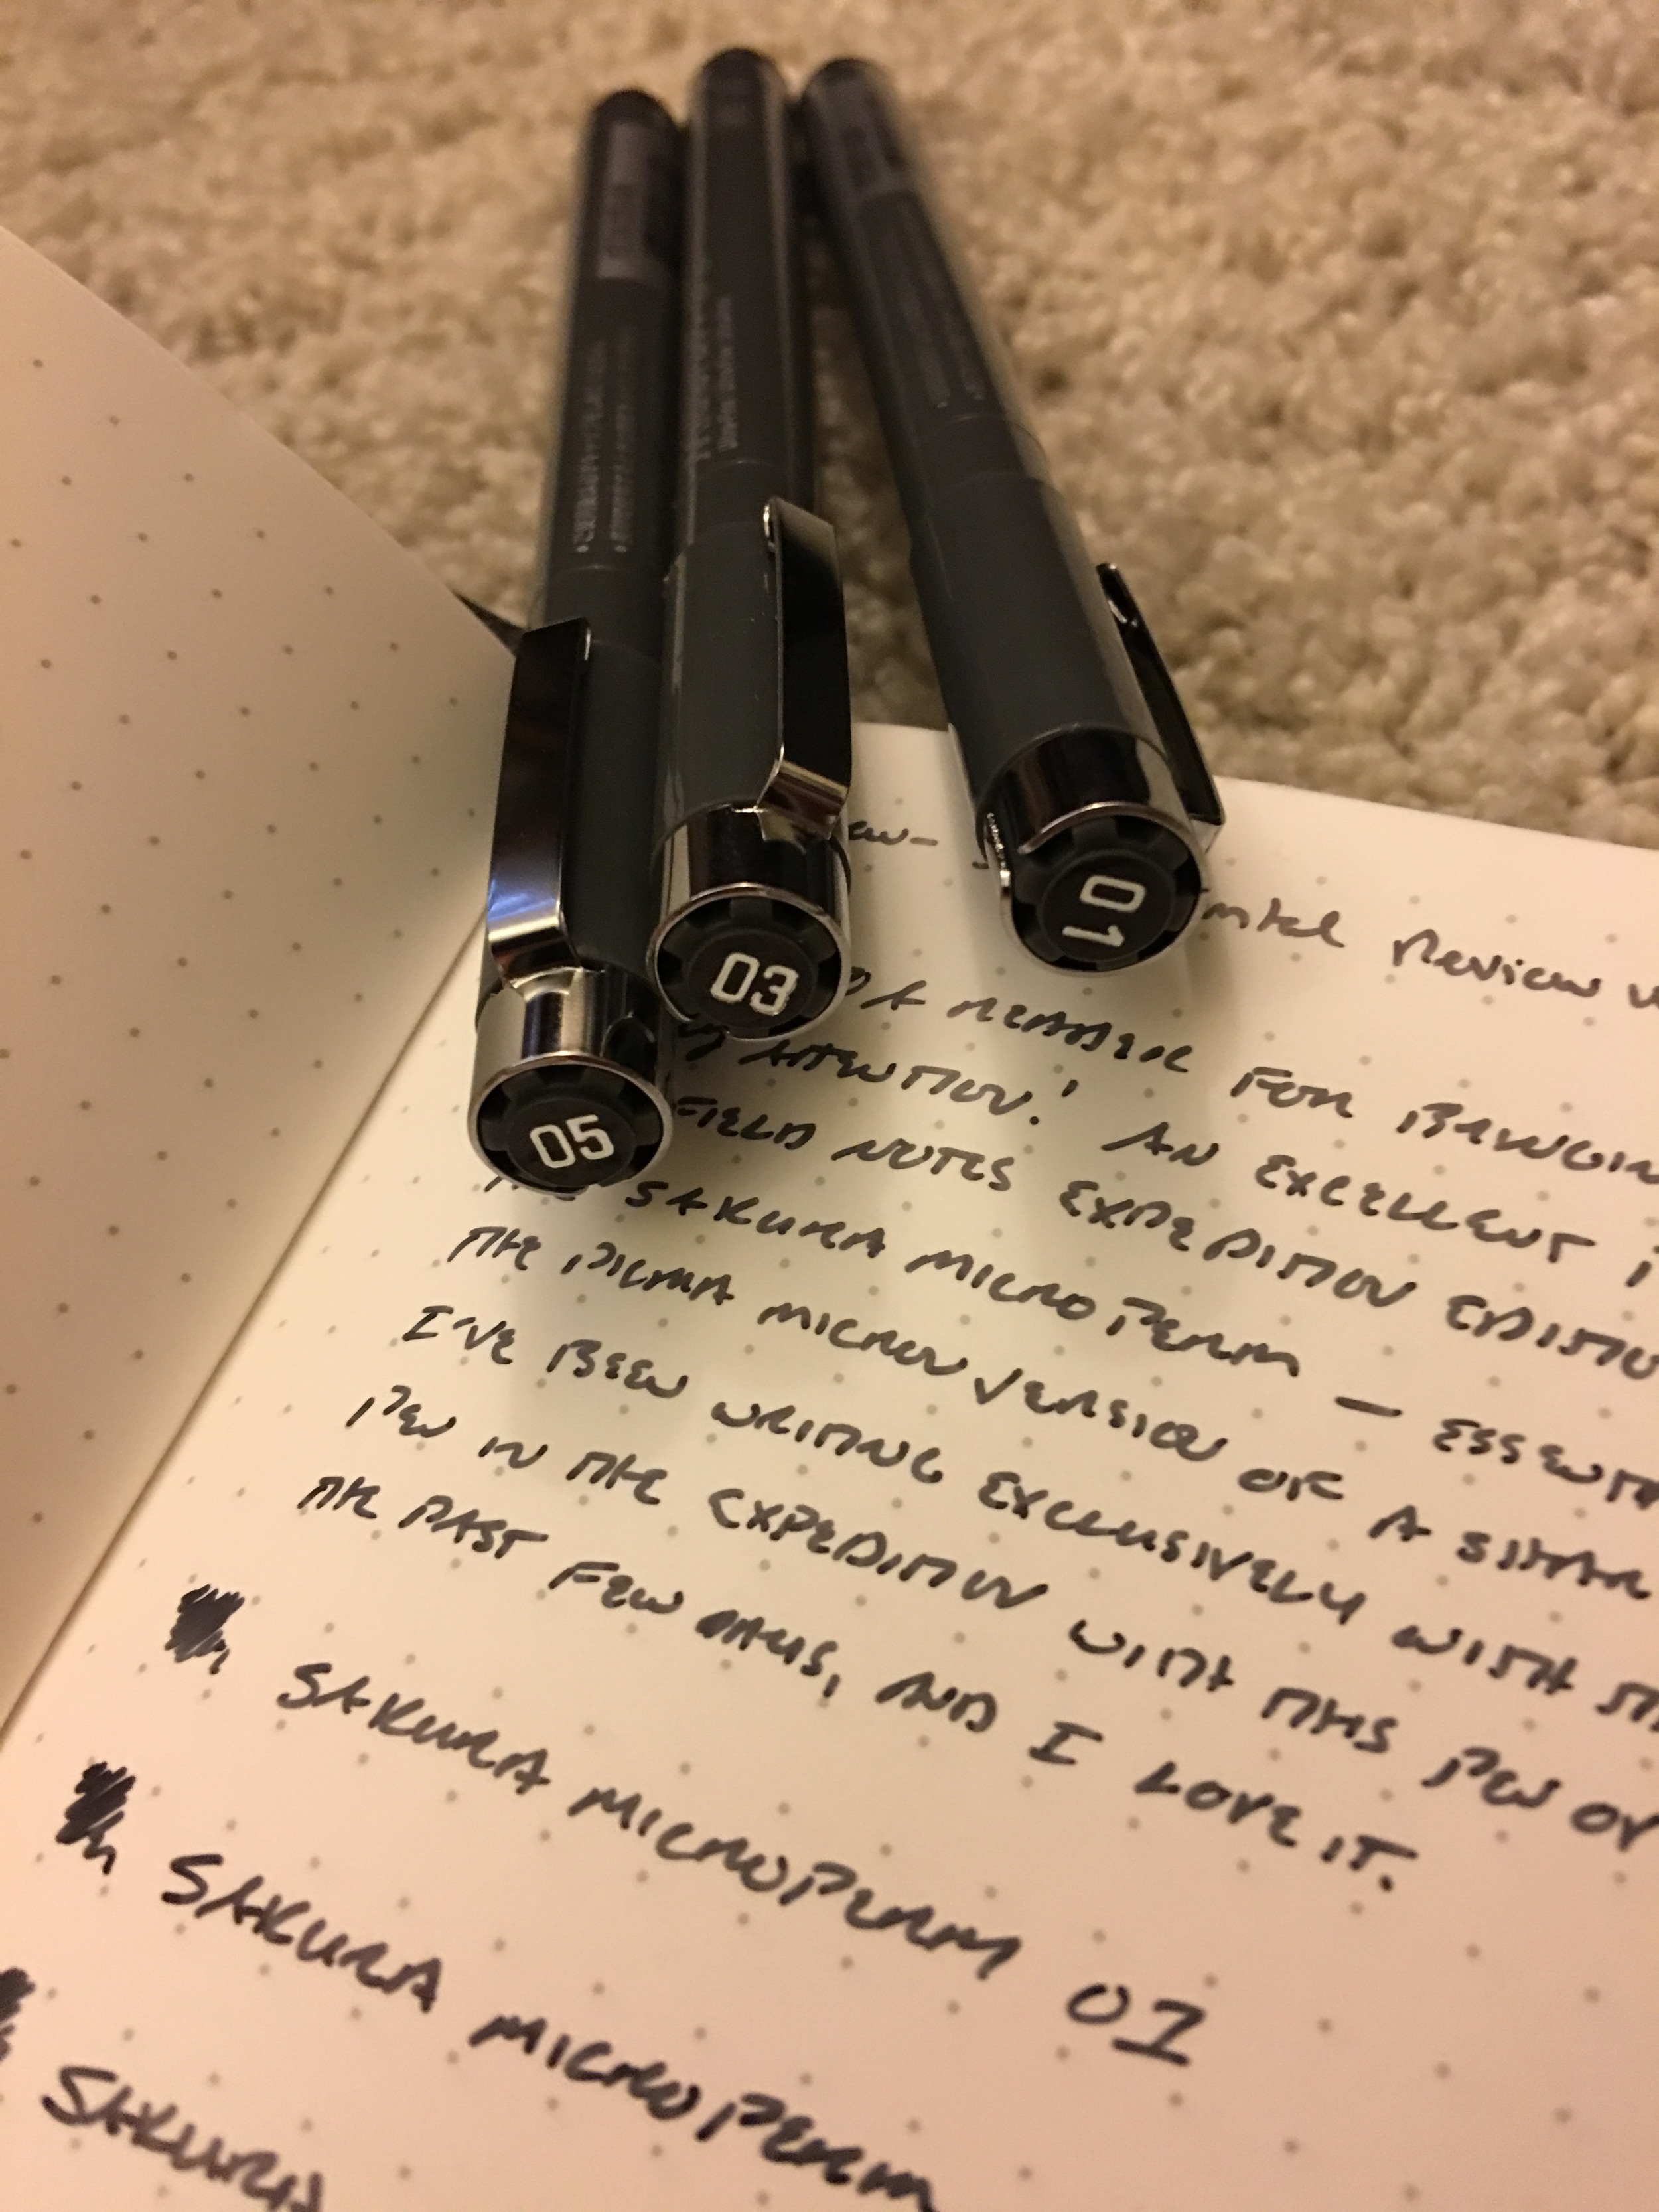 My Sakura Pigma Micron Pen Review